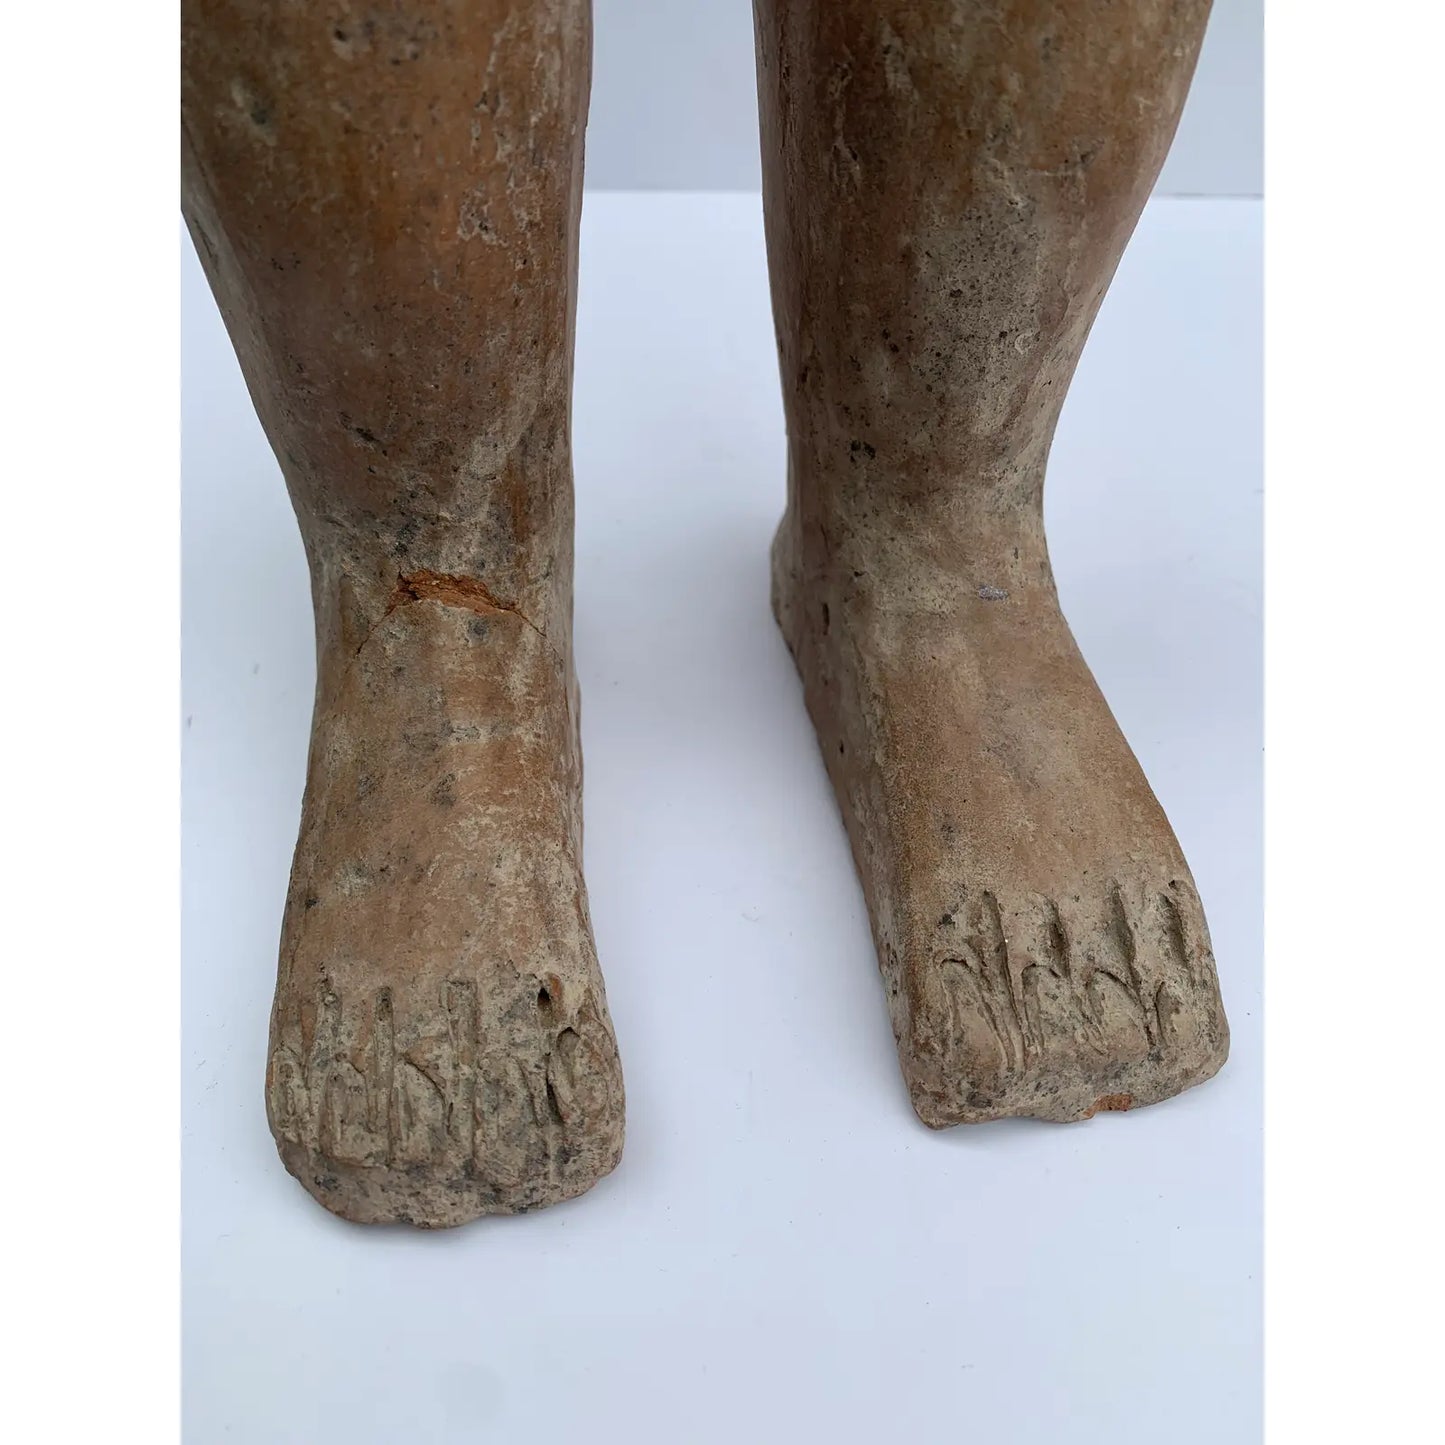 Vintage Rustic Mexican Ceramic Feet Sculpture Fragments - a Pair